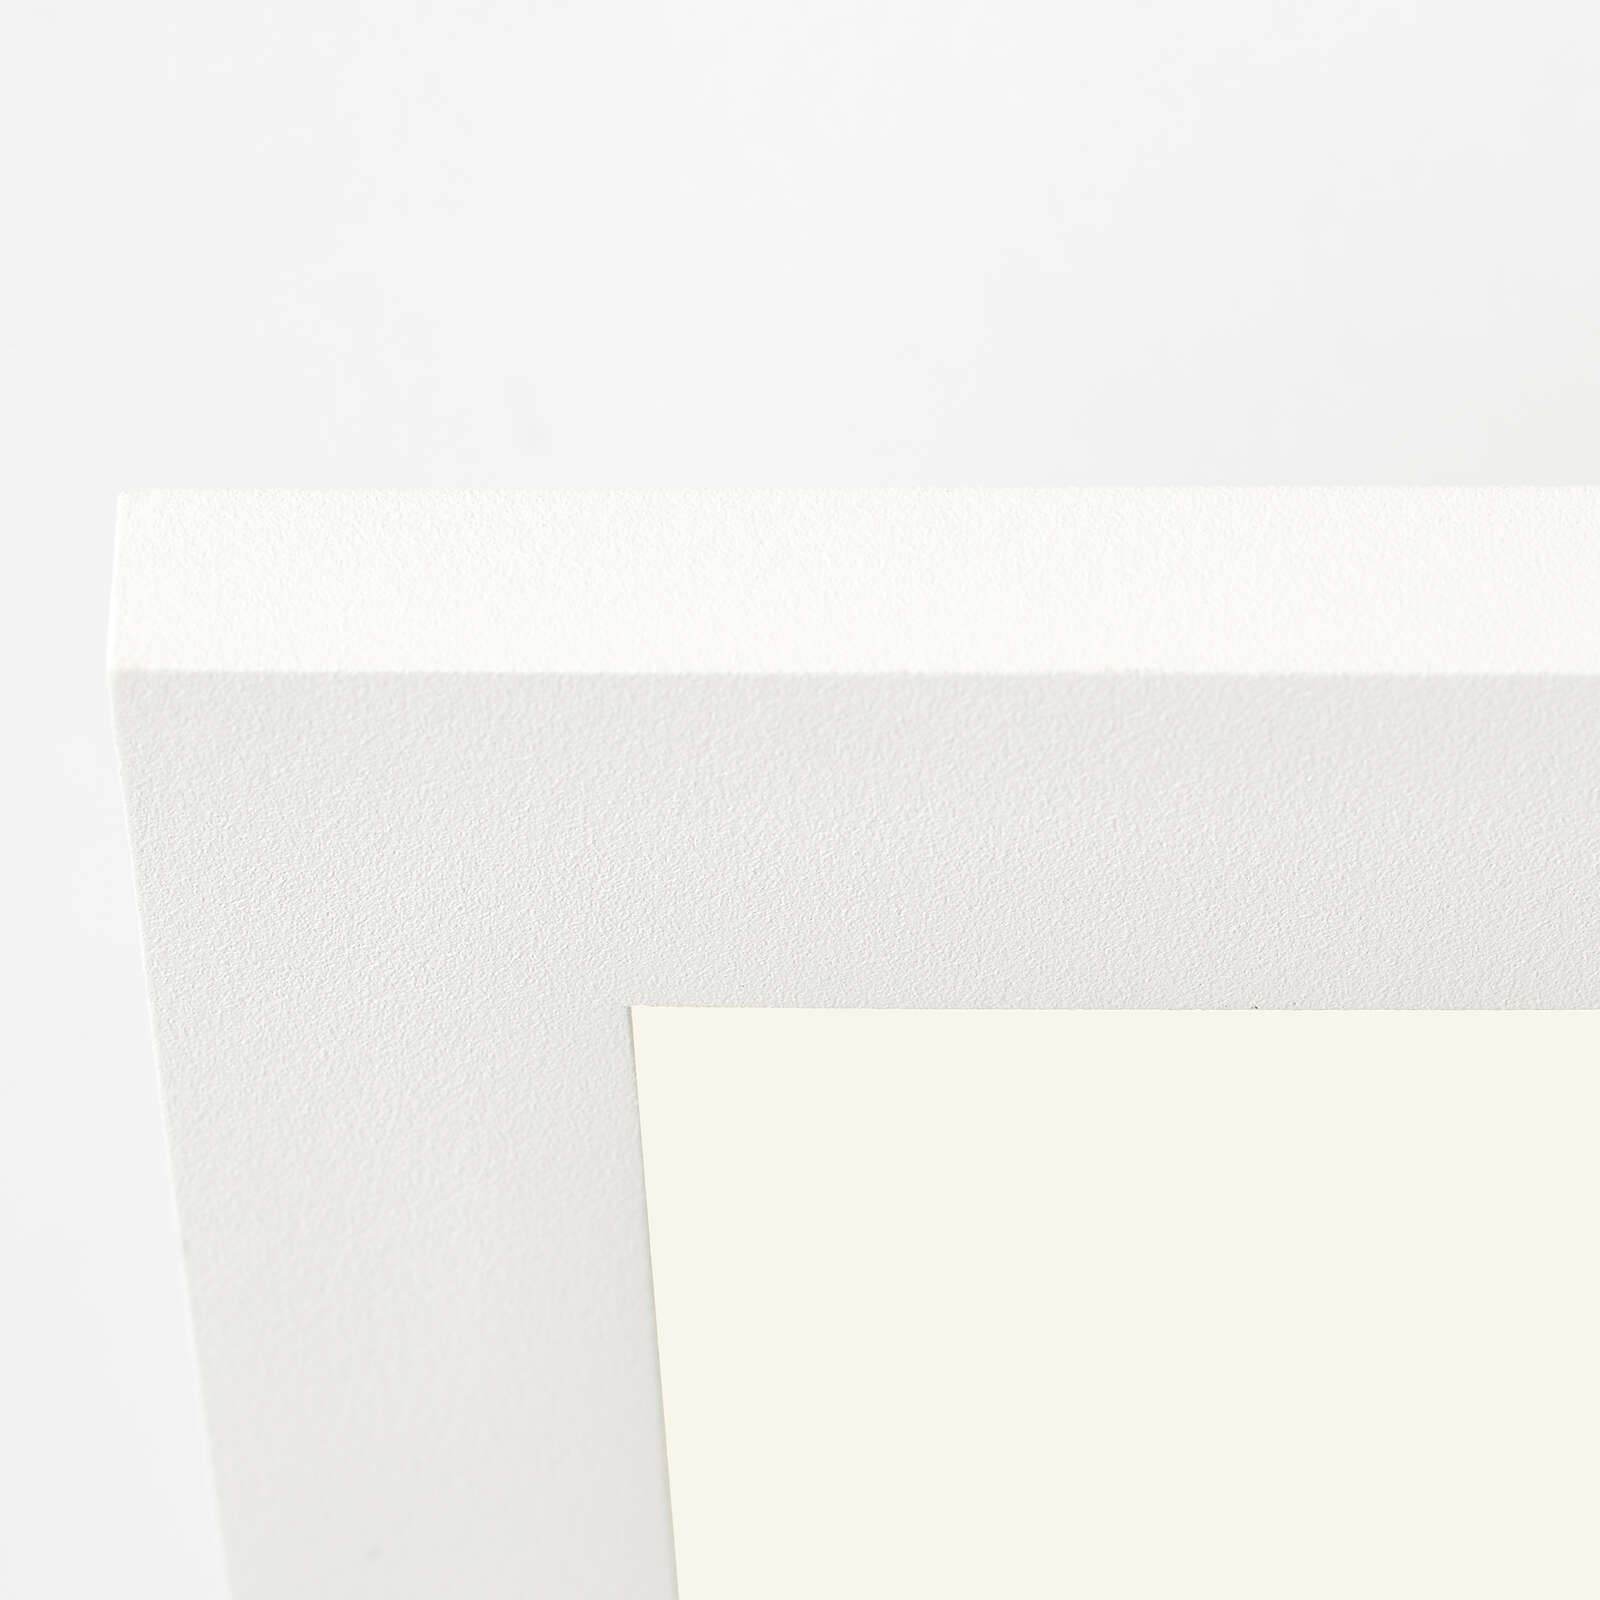             Metal surface-mounted panel - Constantin 14 - White
        